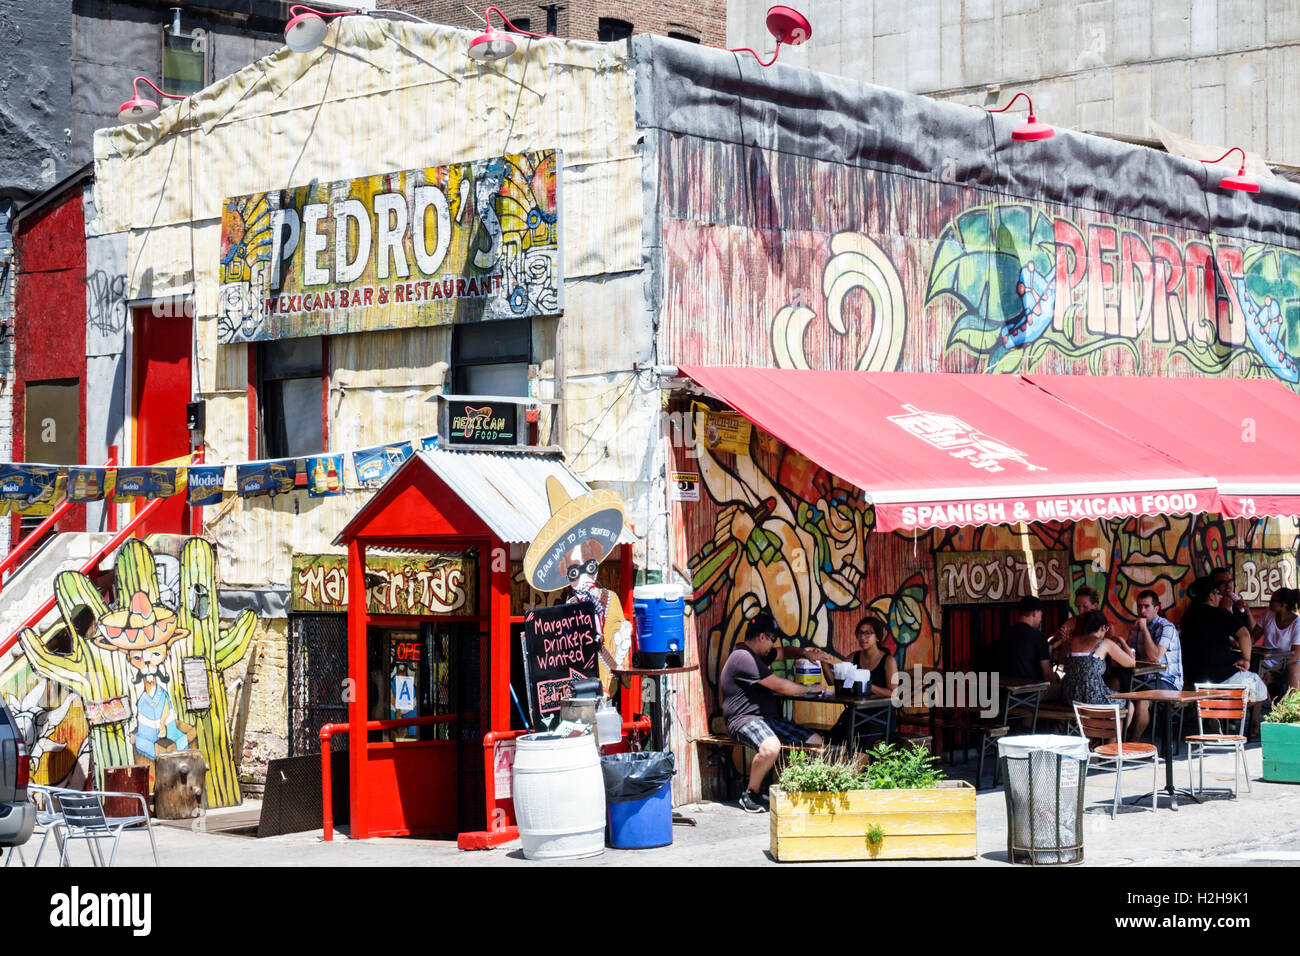 New York City, NY NYC Brooklyn, Dumbo, Front Street, Pedro's Mexican Bar & Restaurant, außen, Graffiti-Kunst, außen, Essen im Freien, Schild, Holzschnitt, Stockfoto